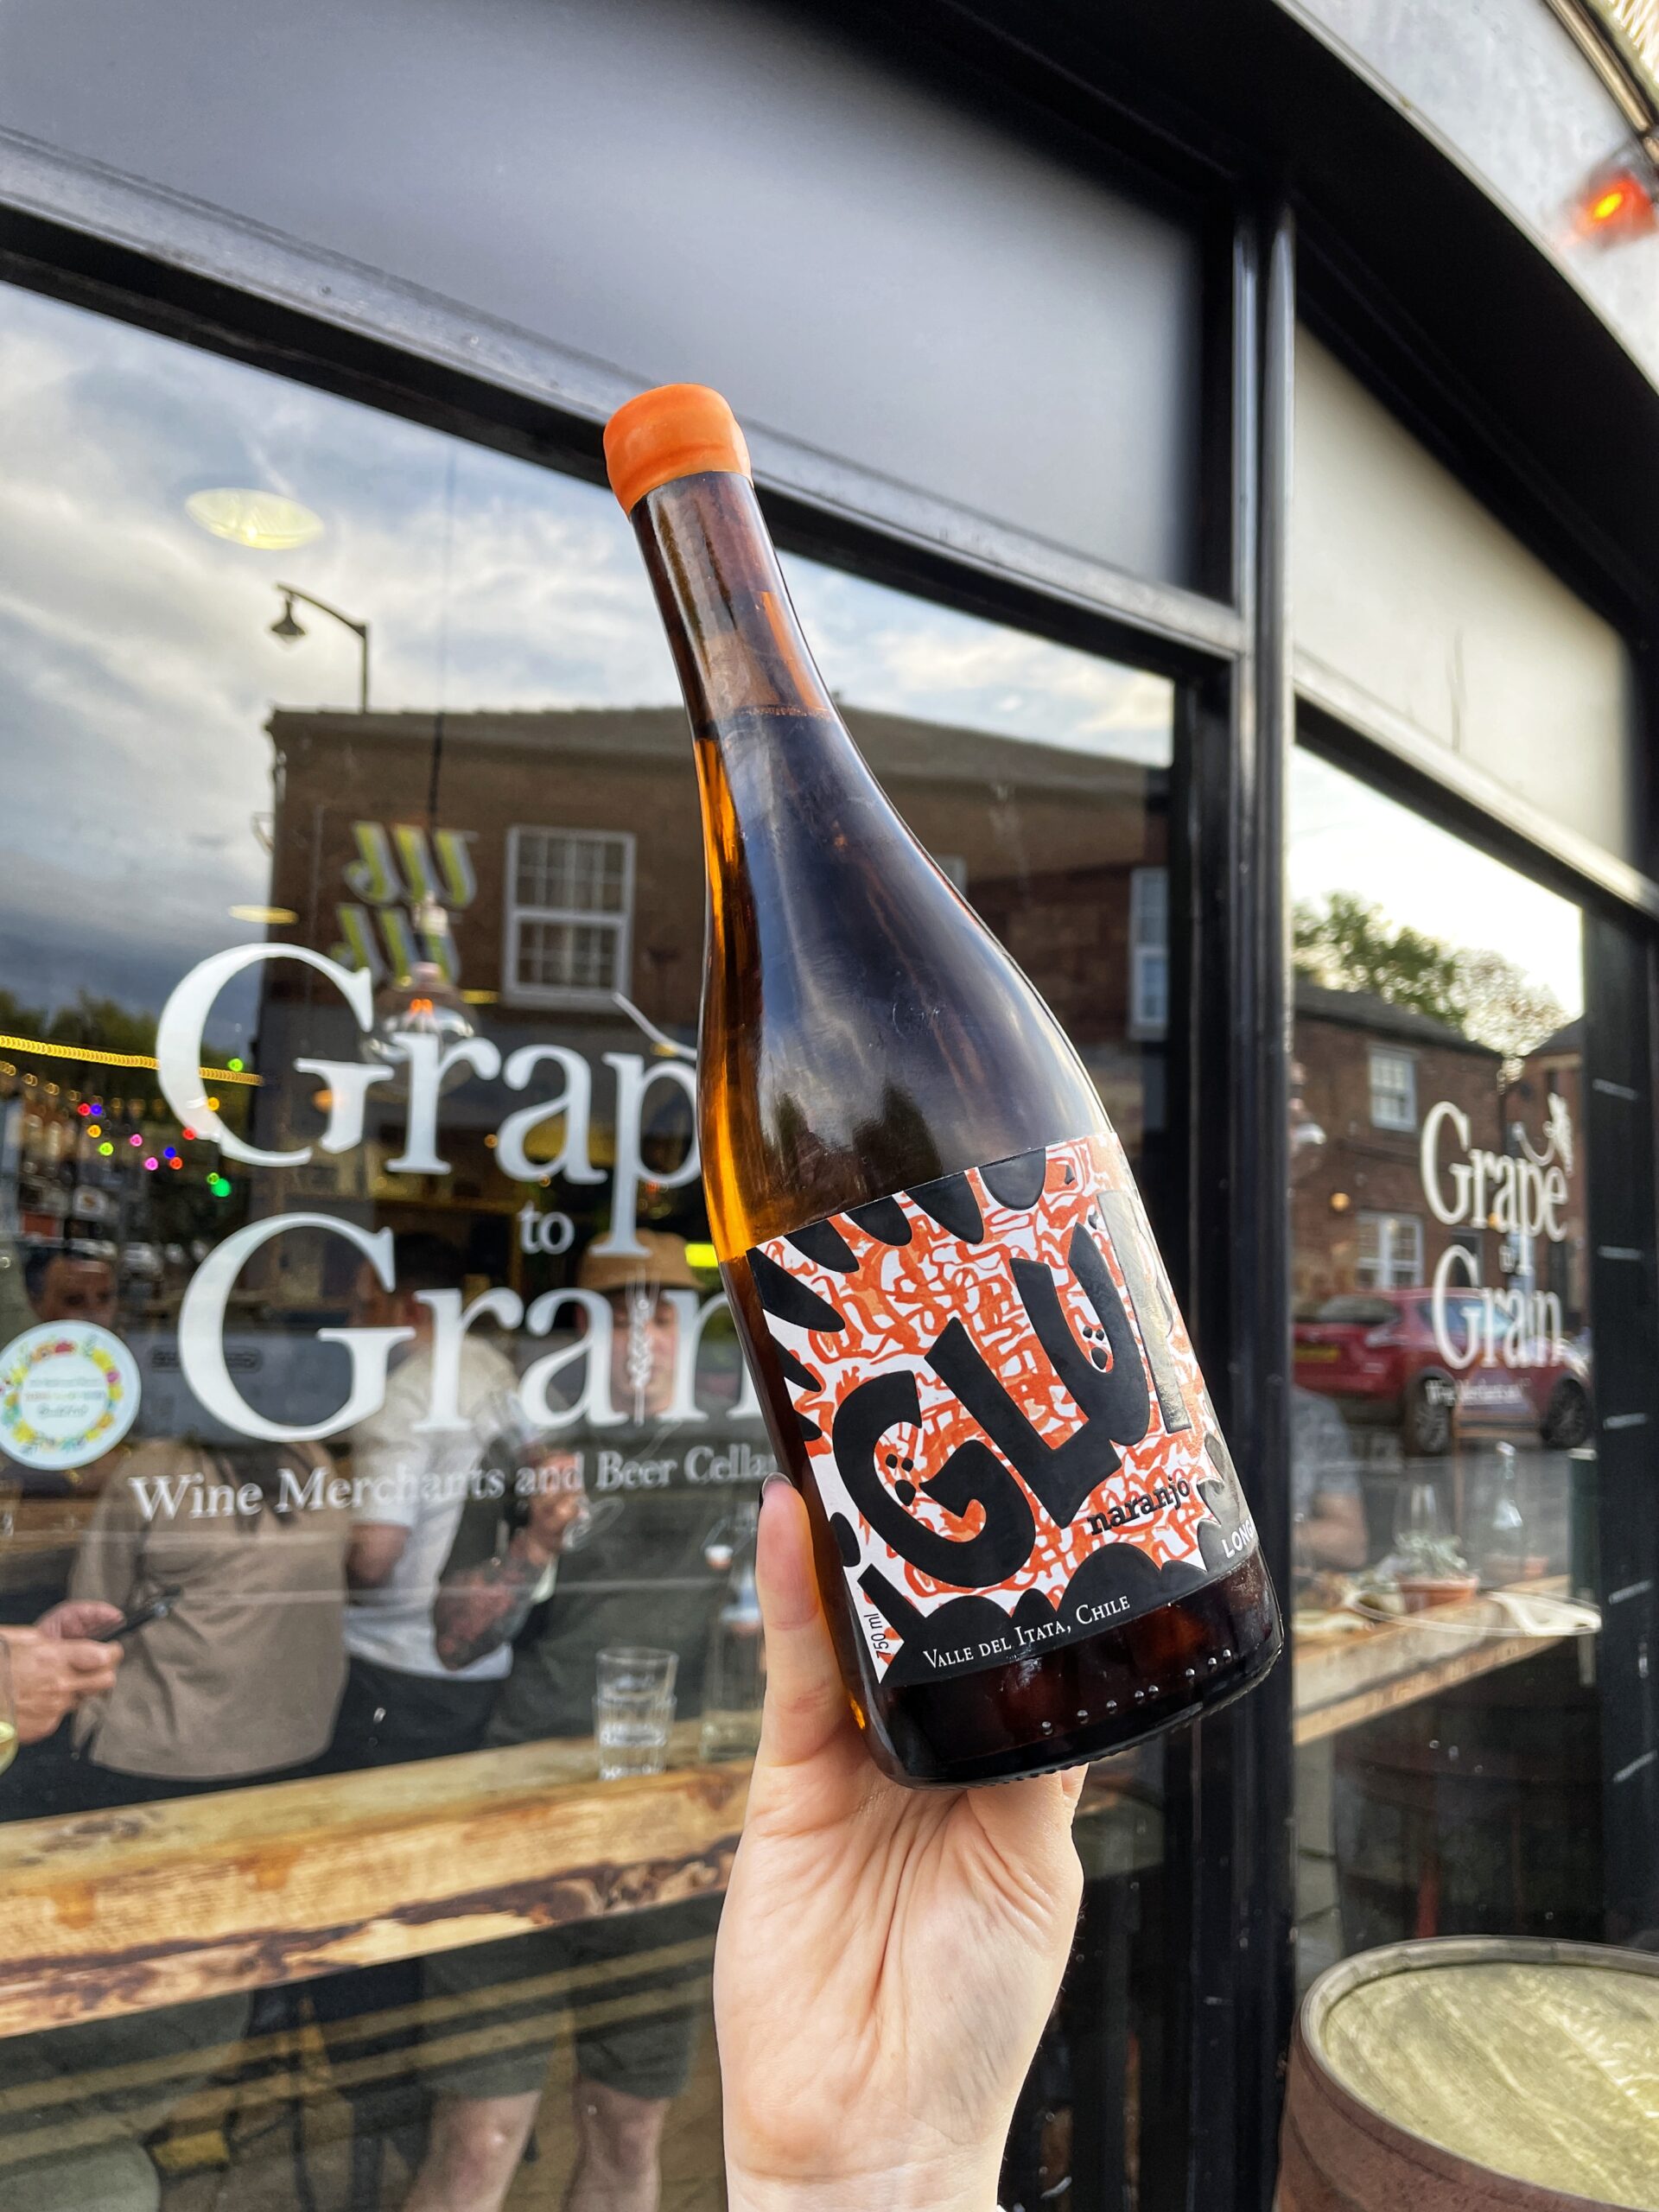 Grape to Grain wine shop in Prestwich. Credit: The Manc Group